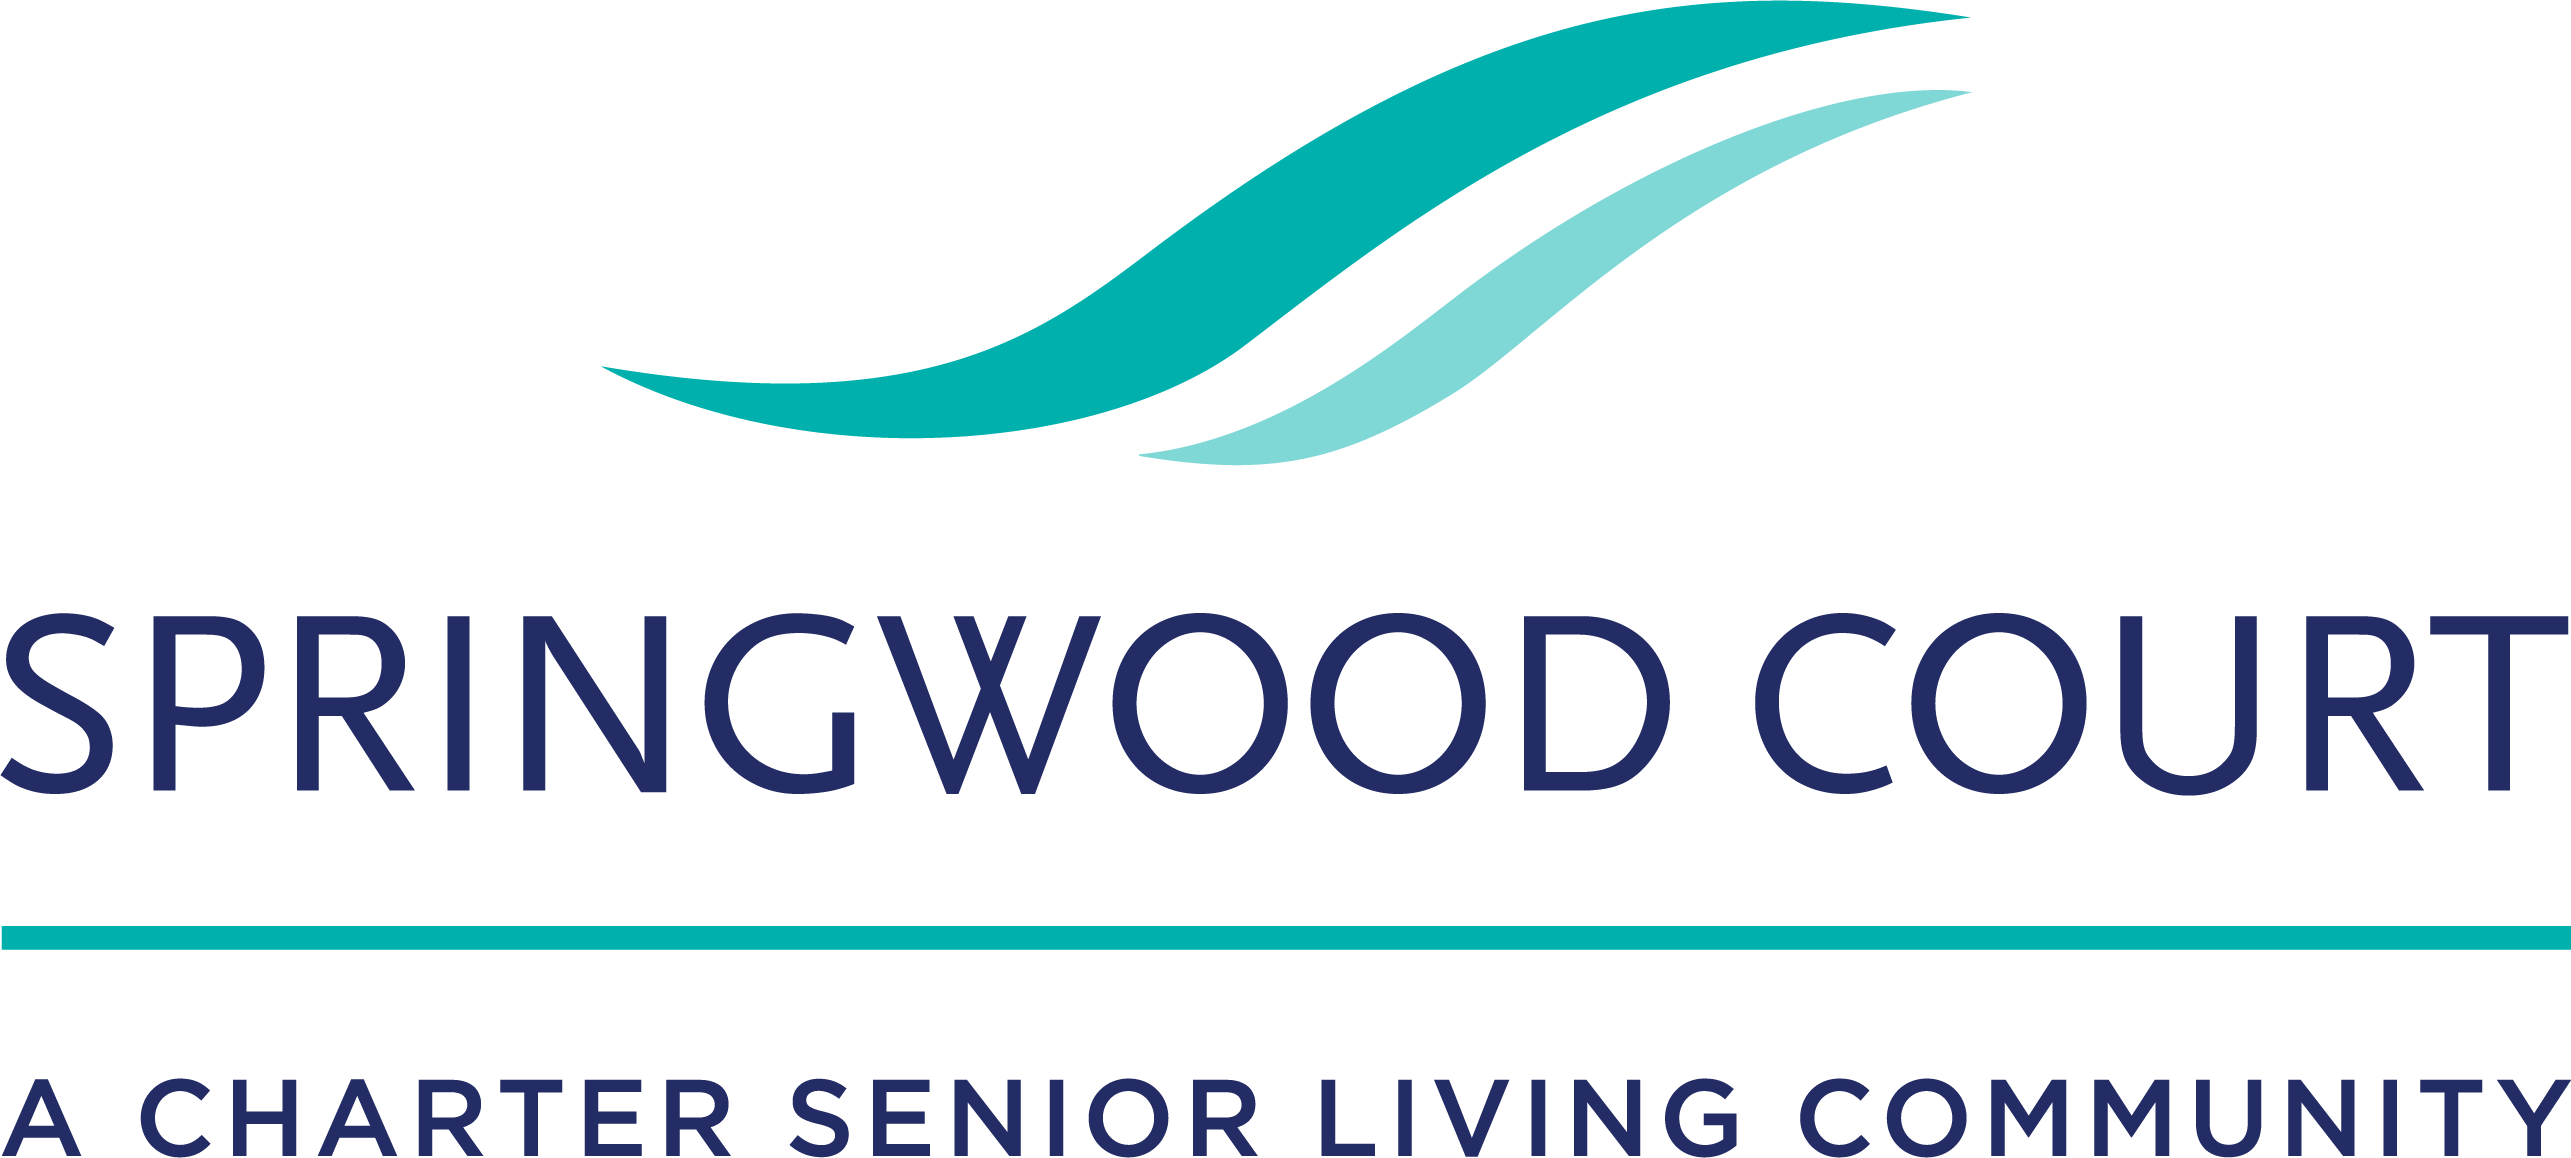 Springwood Court Logo